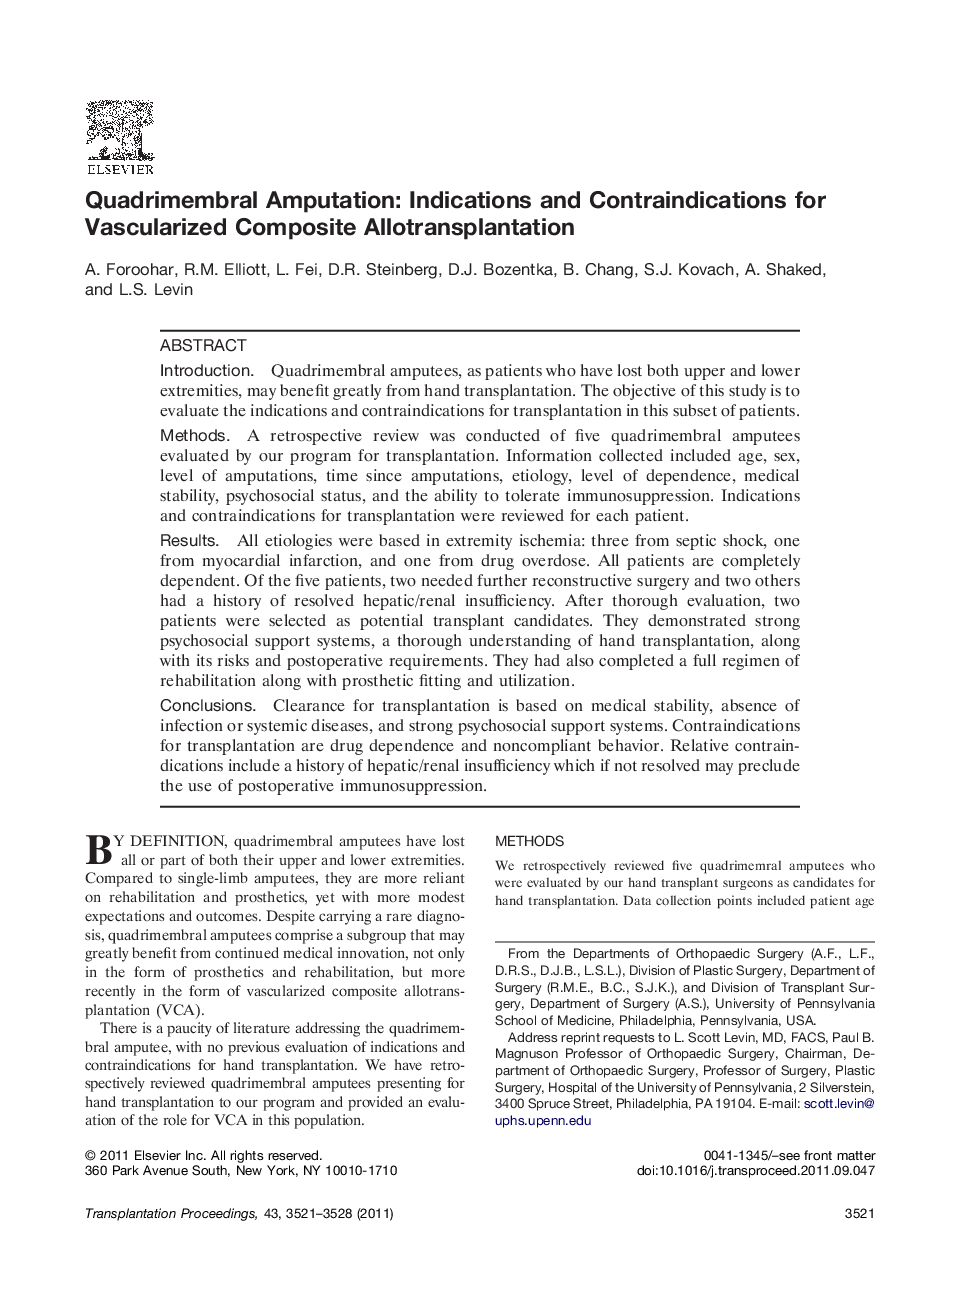 Quadrimembral Amputation: Indications and Contraindications for Vascularized Composite Allotransplantation